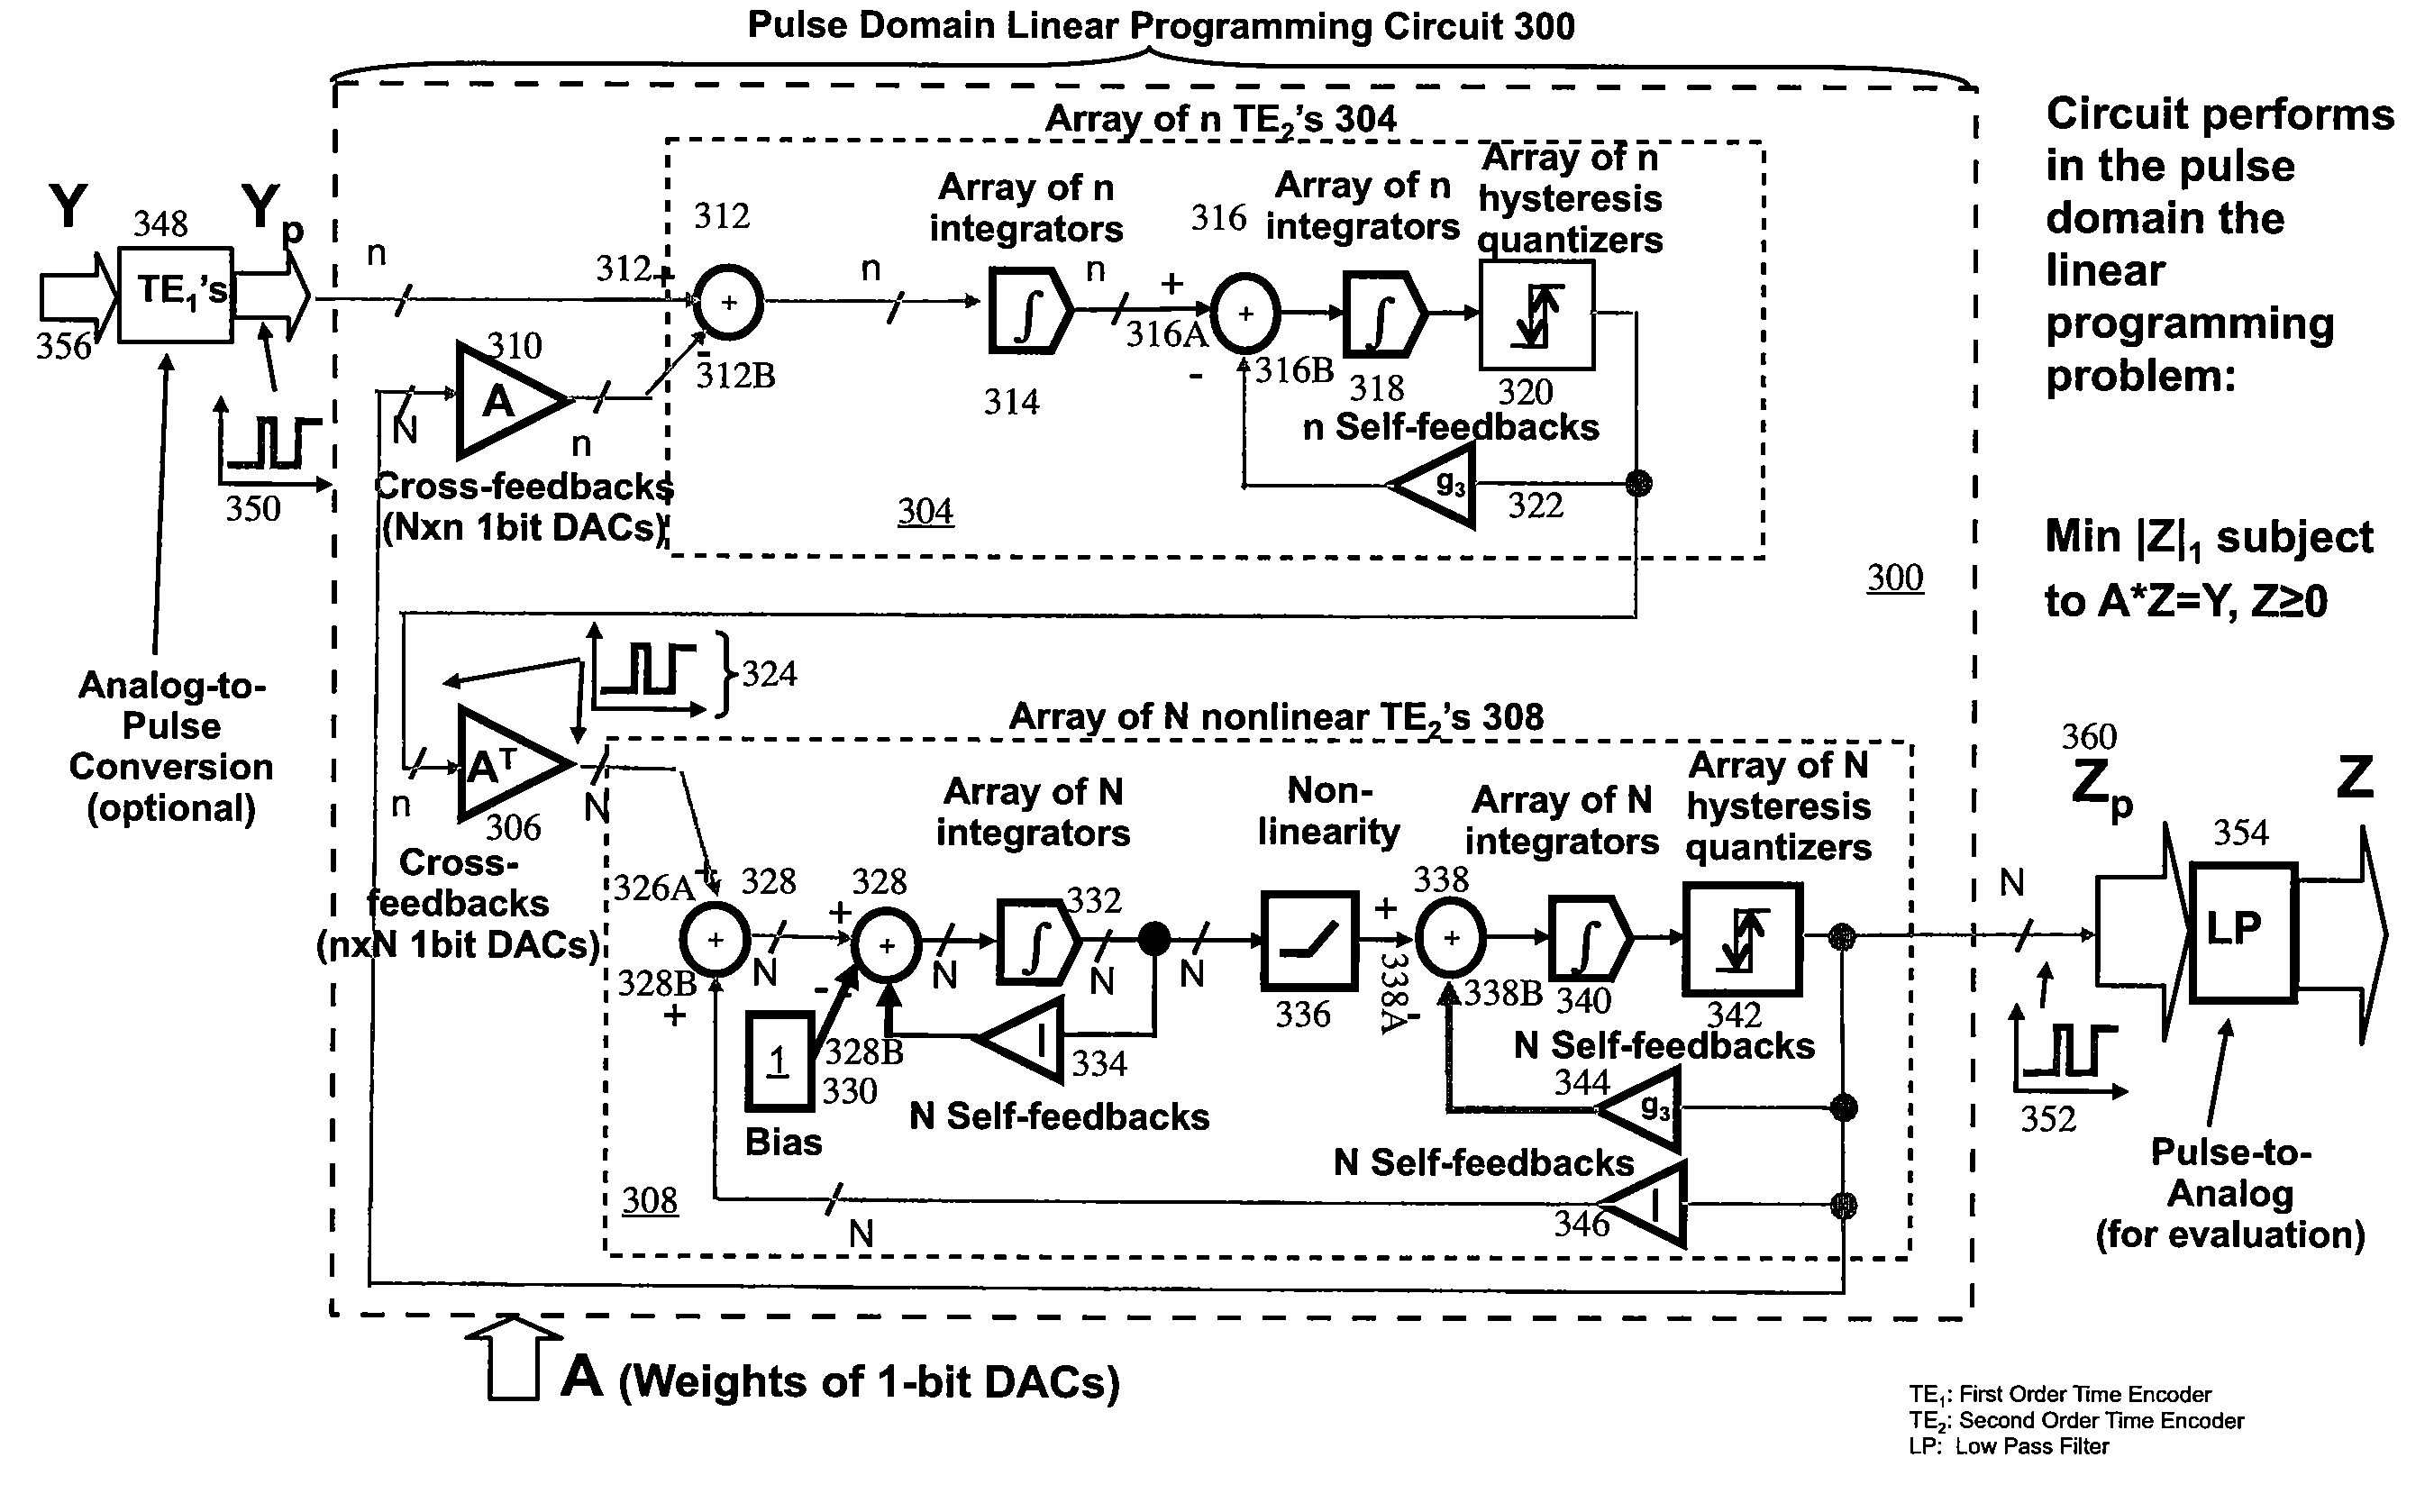 Pulse domain linear programming circuit